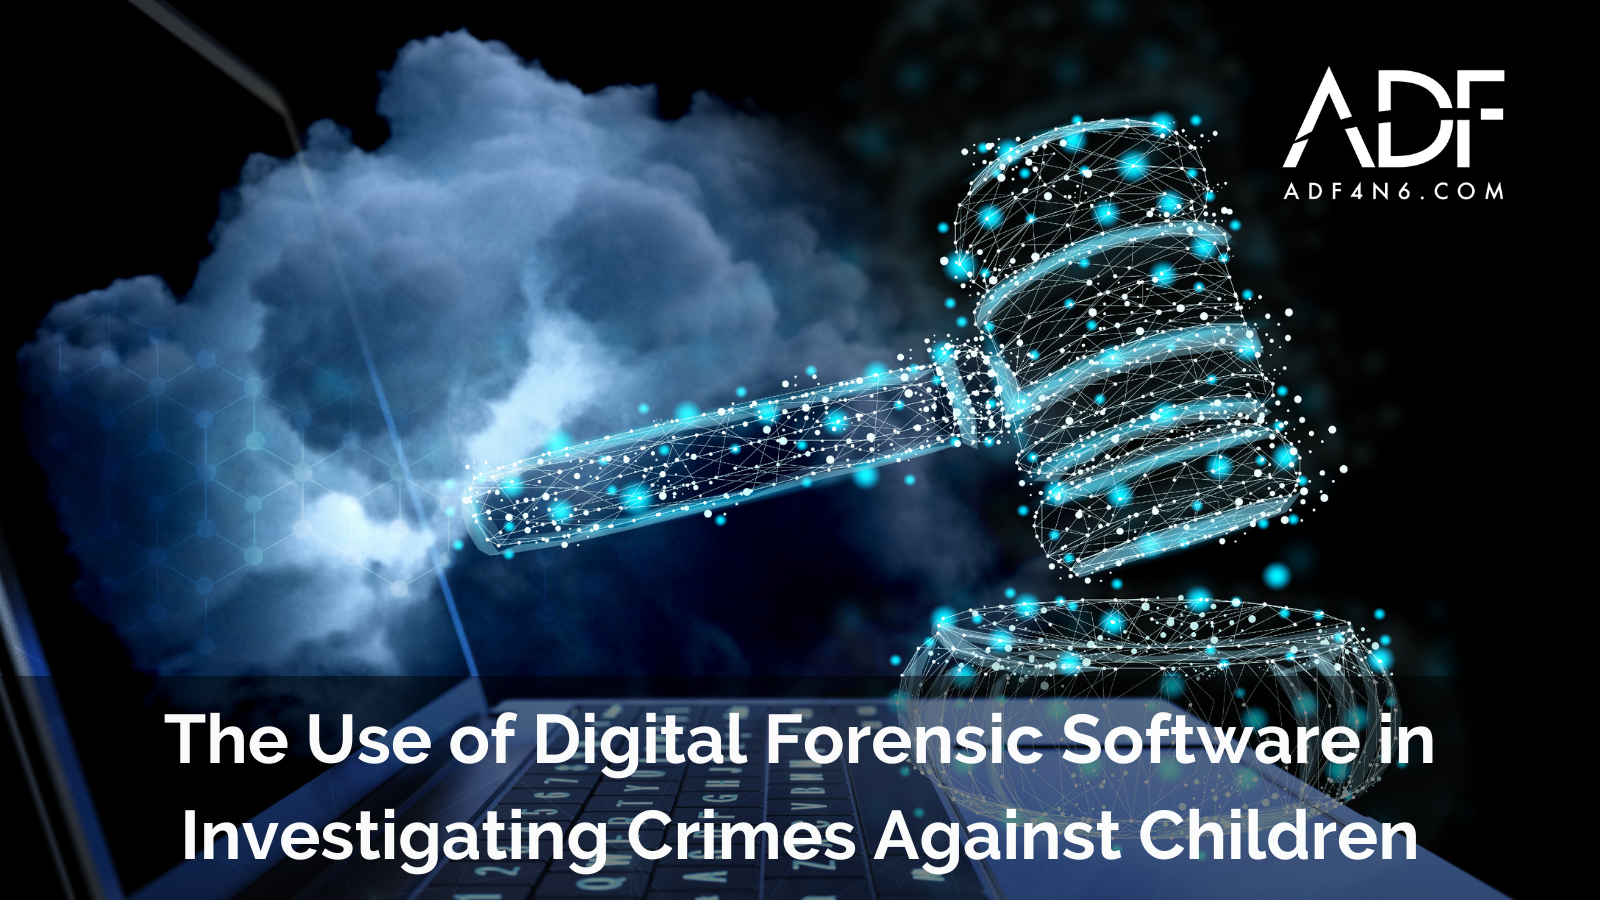 Using Digital Forensic Software to Investigate Crimes Against Children